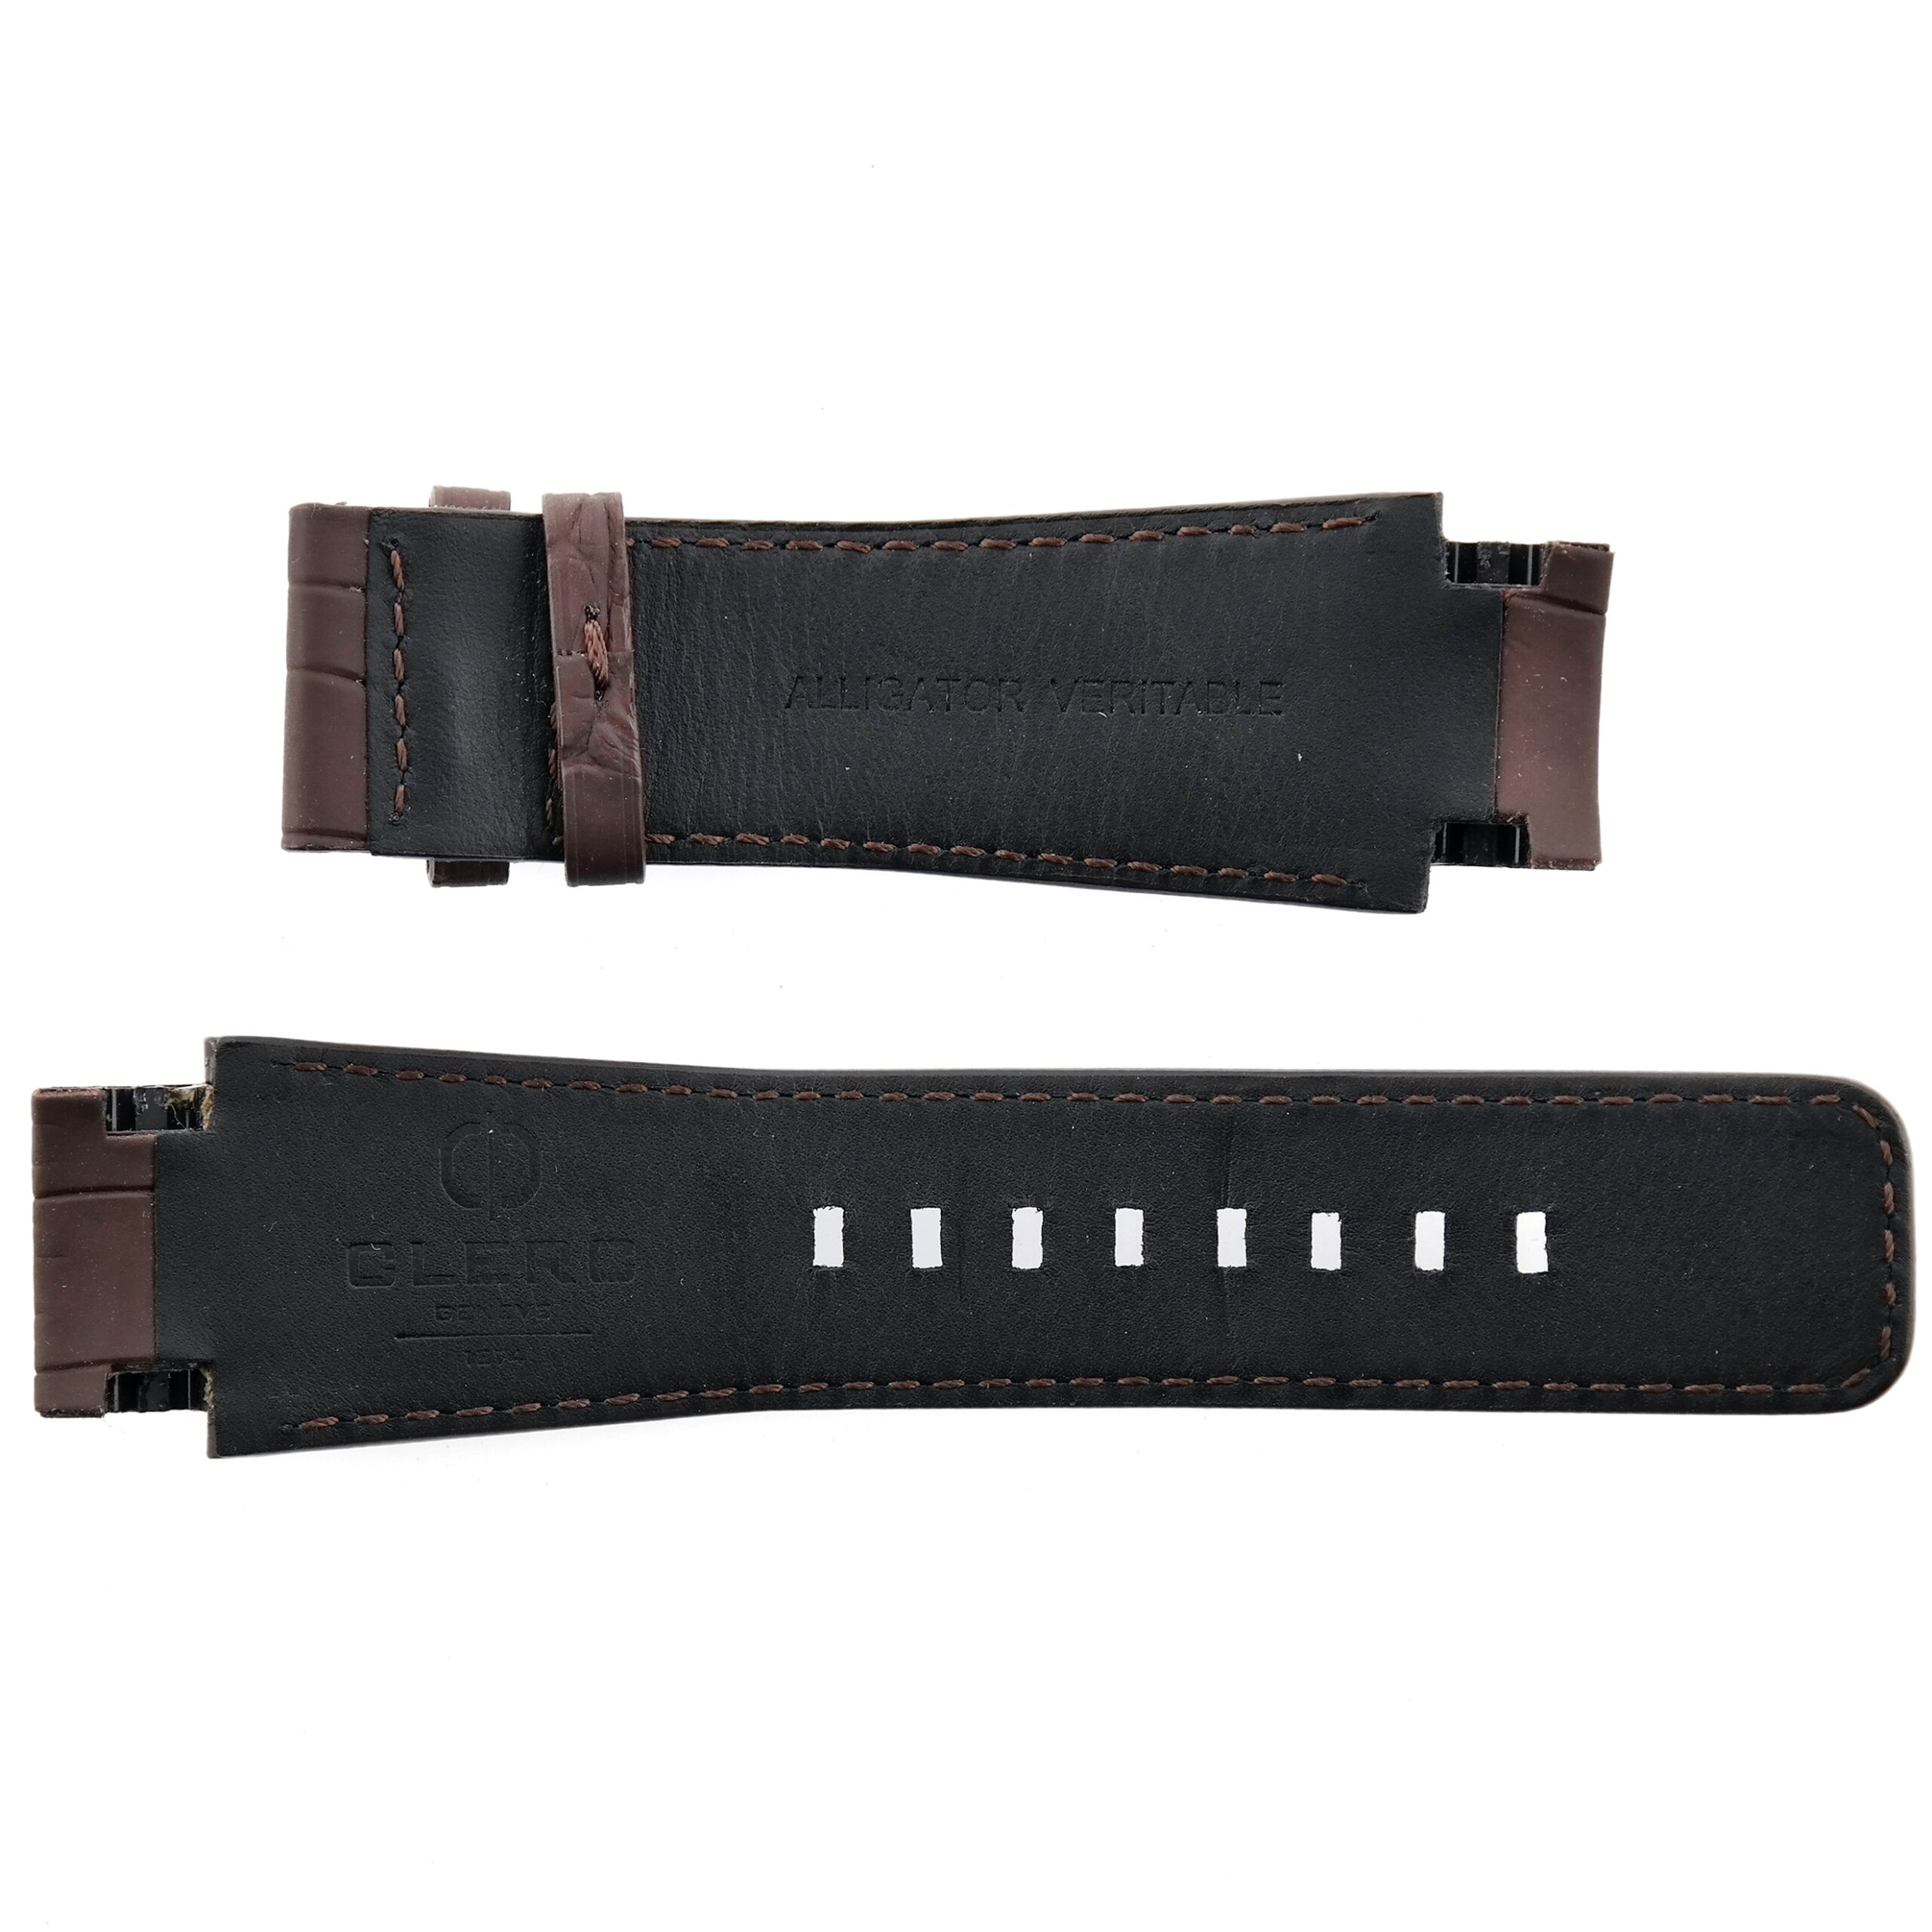 CLERC Geneve - Hydroscaph - Leather Watch Strap - Brown - Genuine Gator